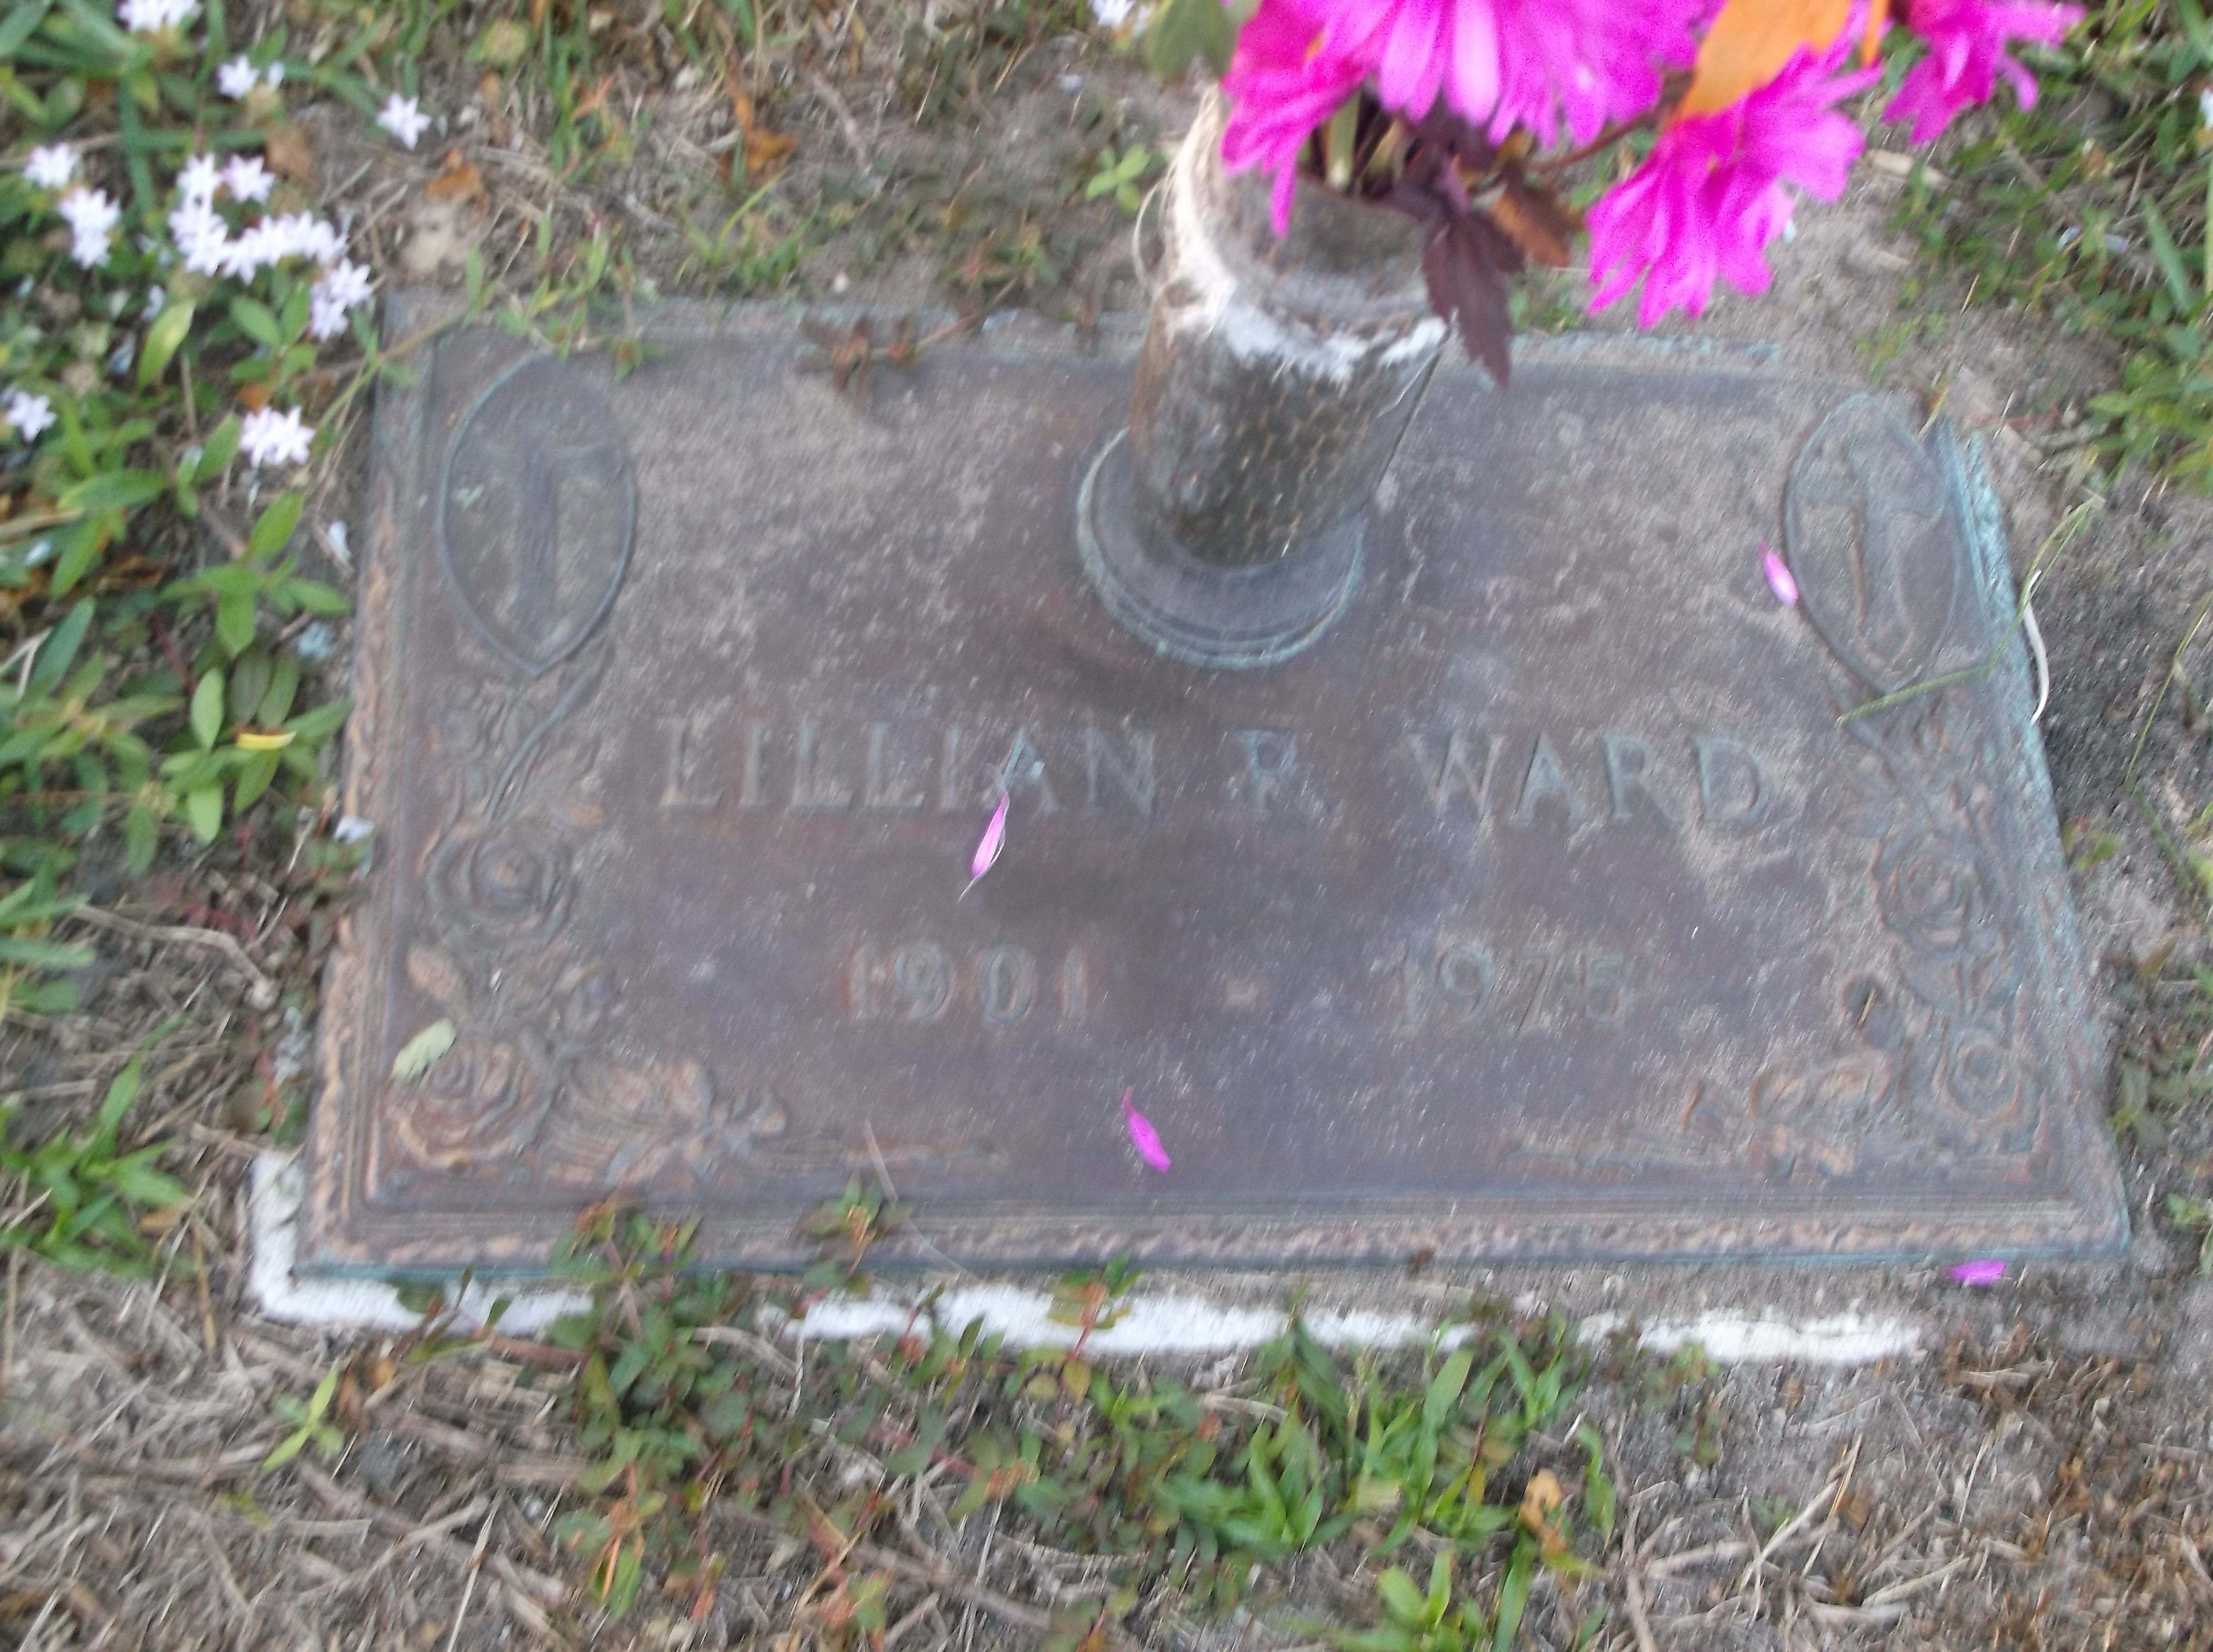 Lillian R Ward